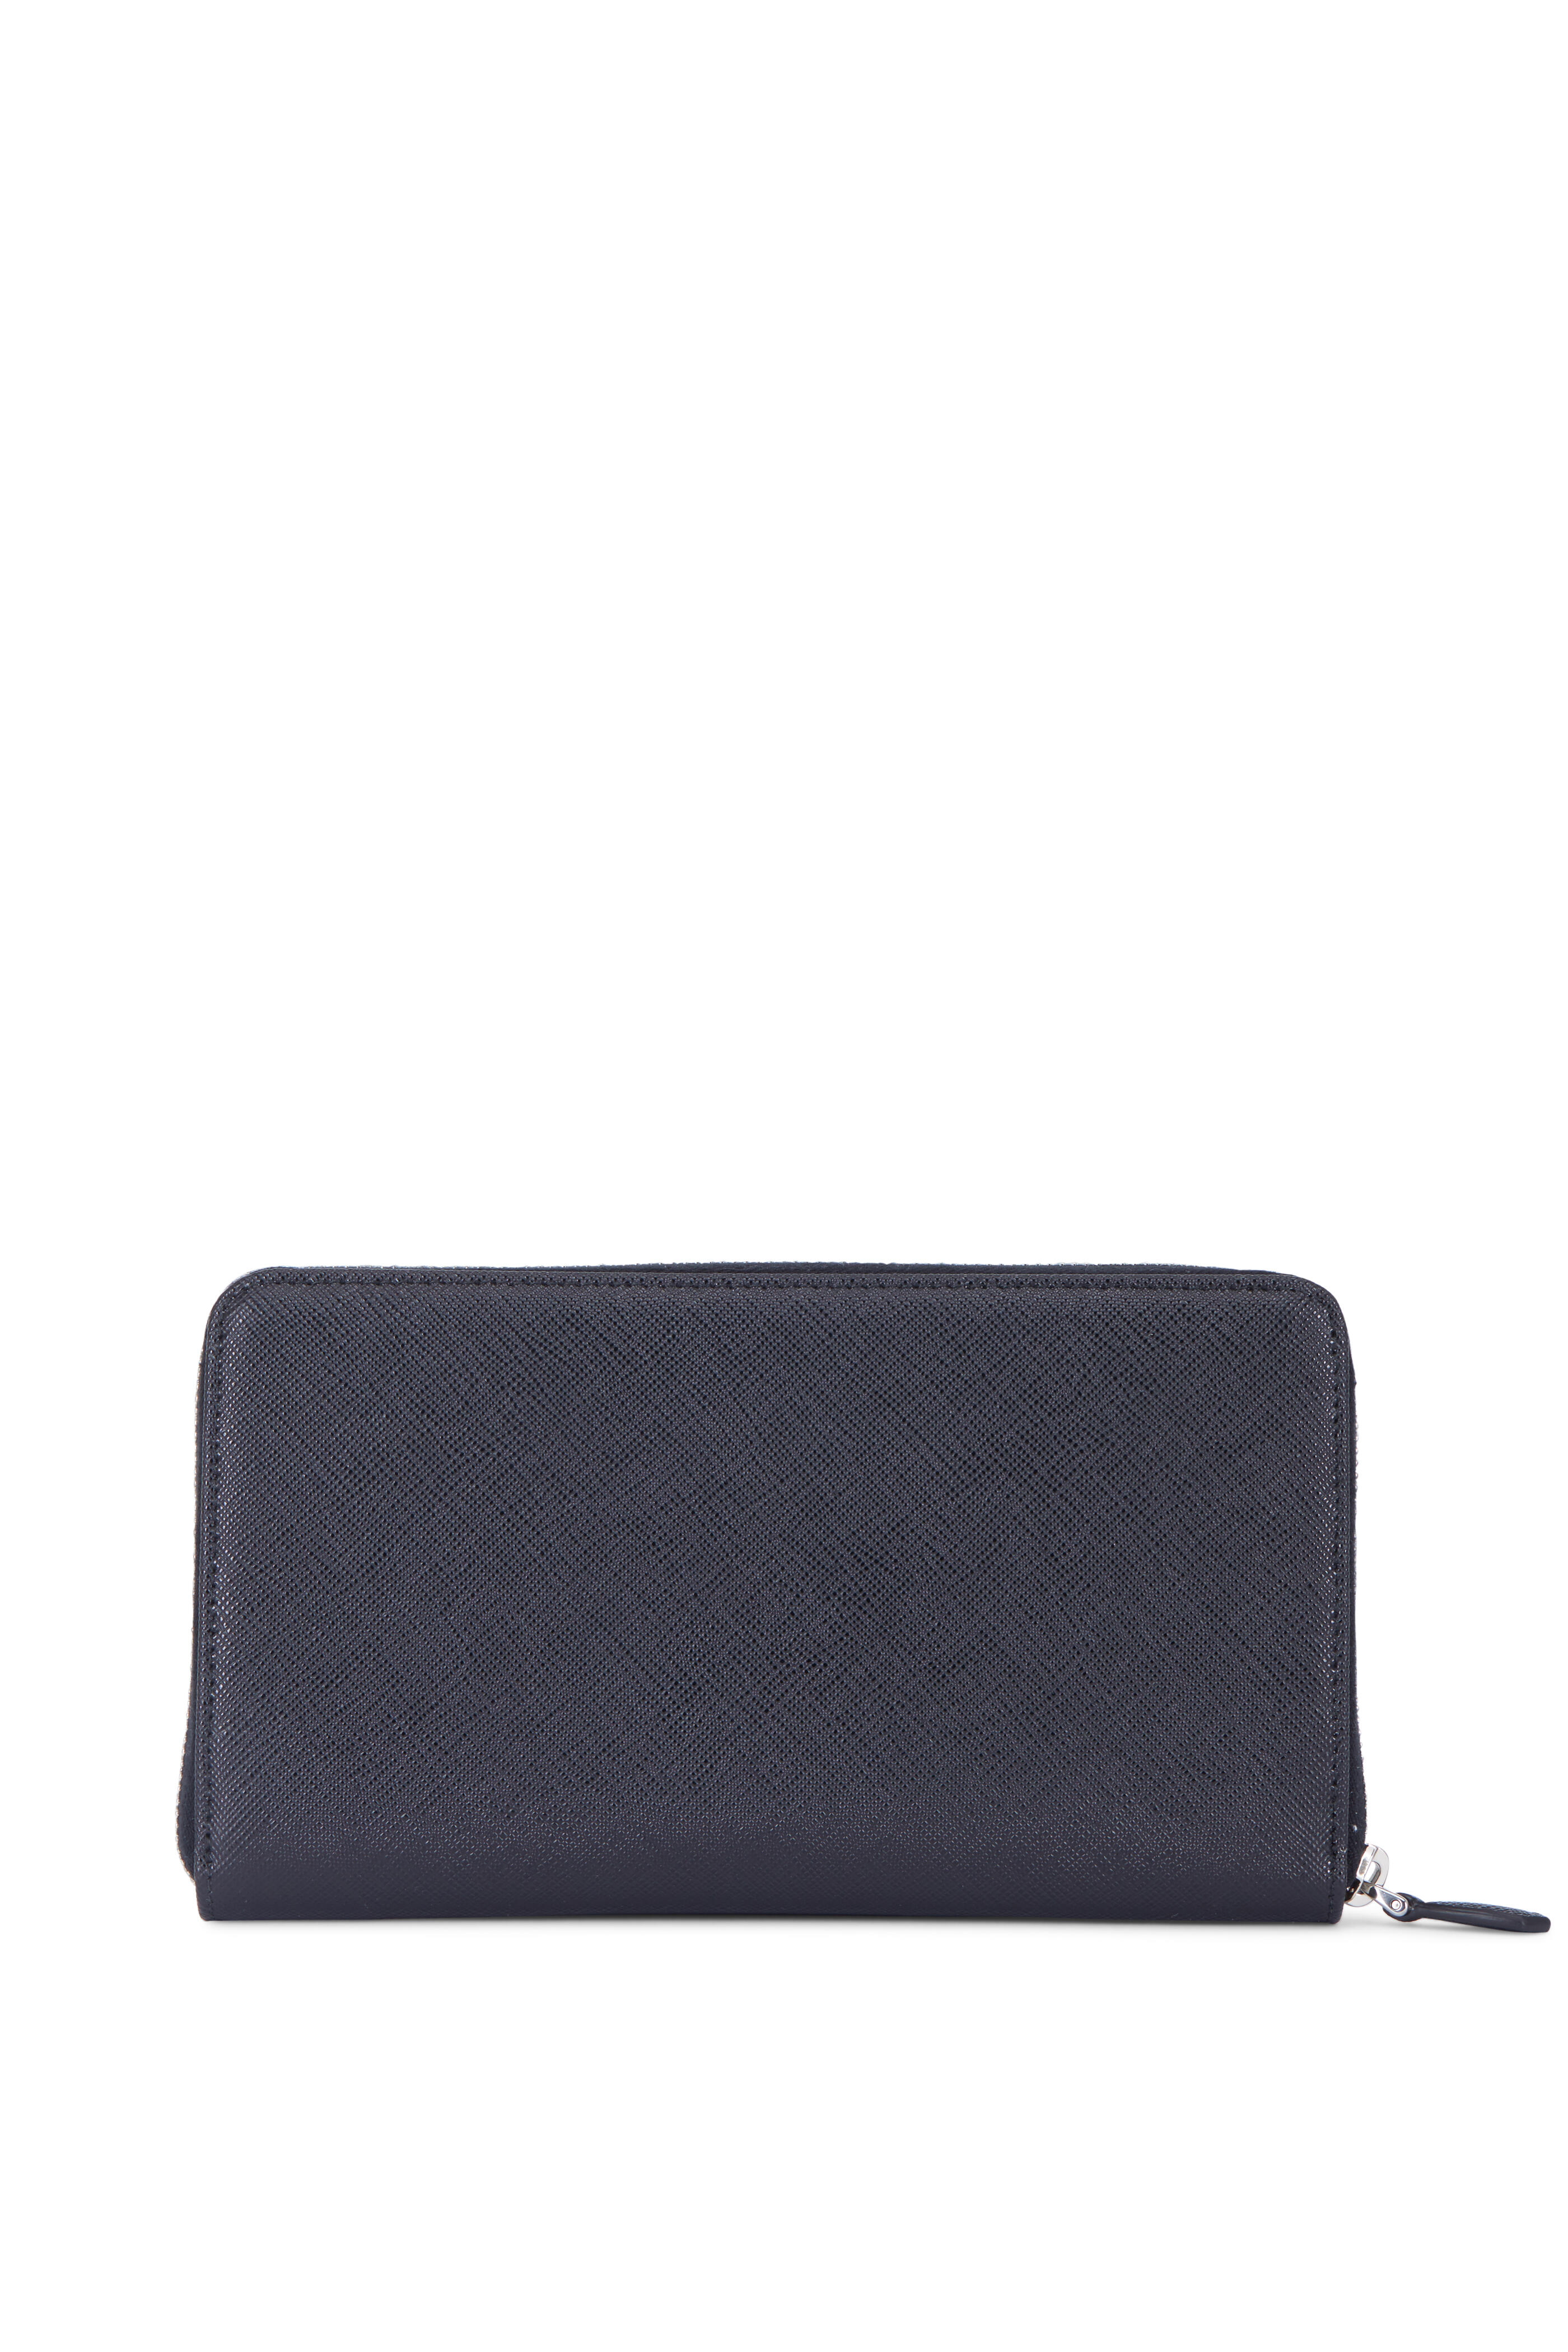 Prada Character Saffiano Leather Zip Wallet In Multi